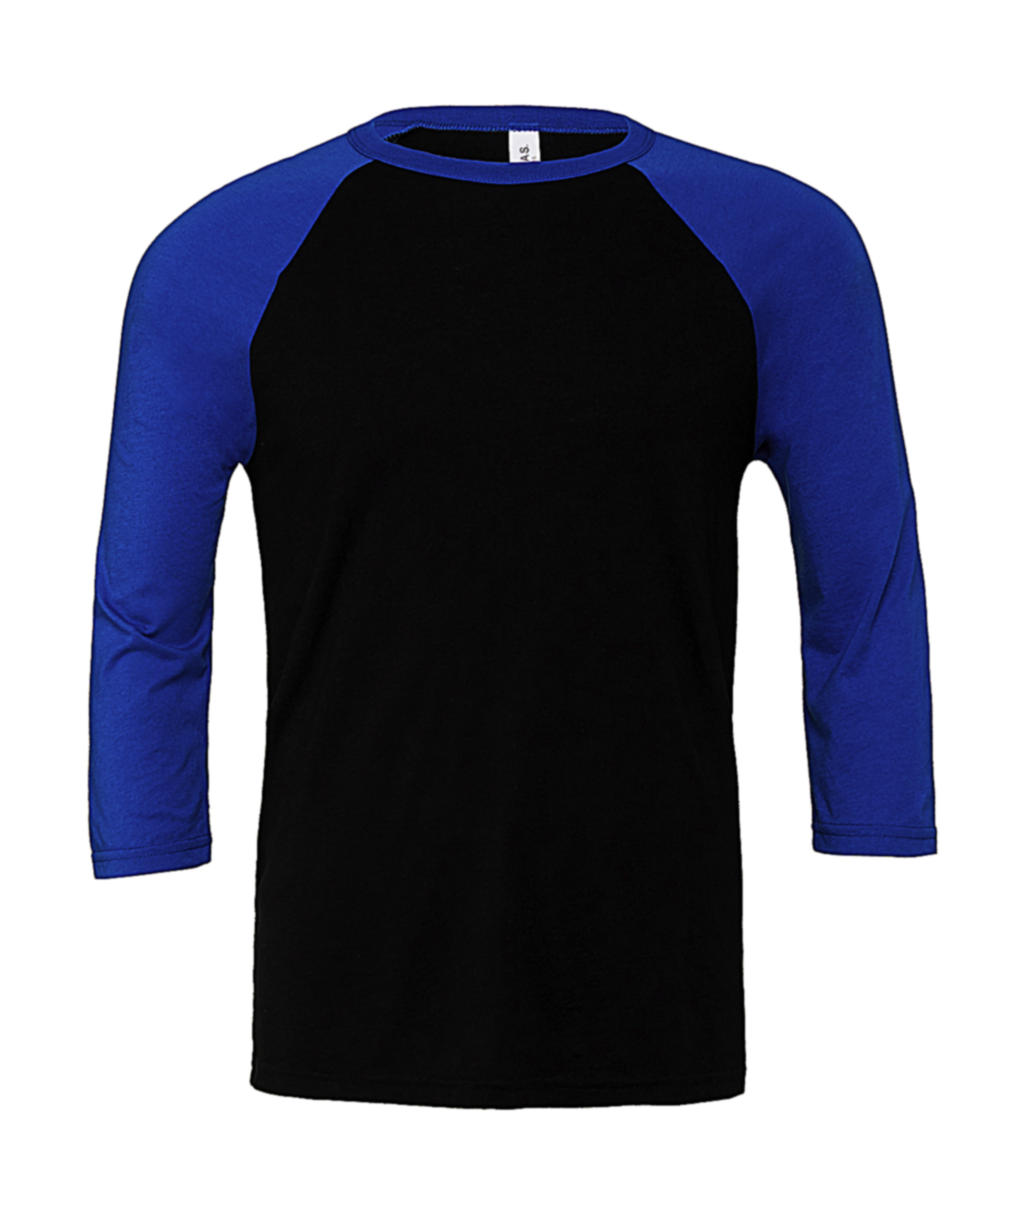  Unisex 3/4 Sleeve Baseball T-Shirt in Farbe Black/True Royal